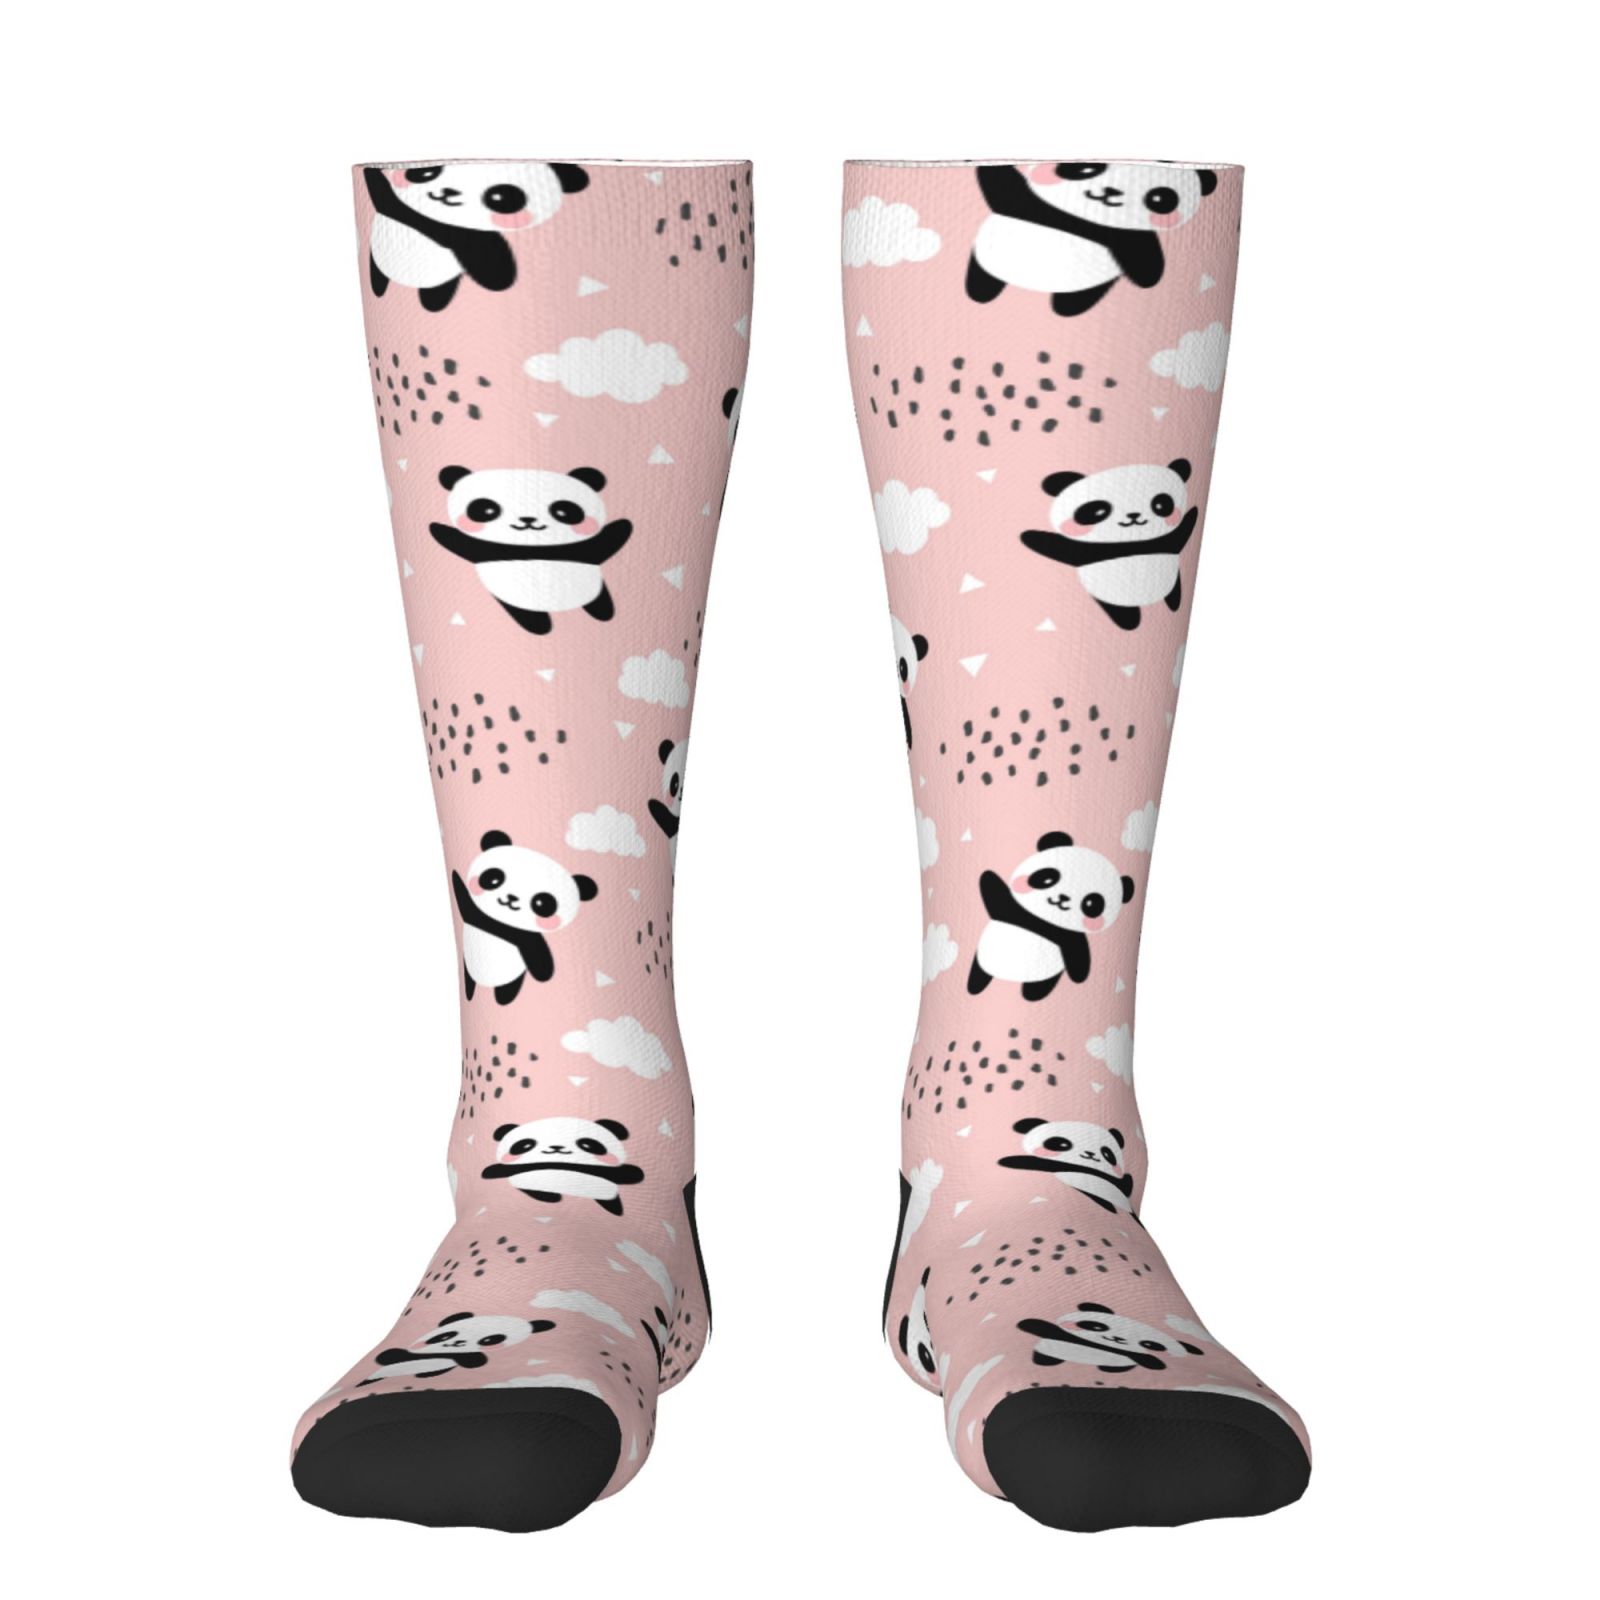 Easygdp Panda Soccer Socks Sport Knee High Socks Calf Compression ...